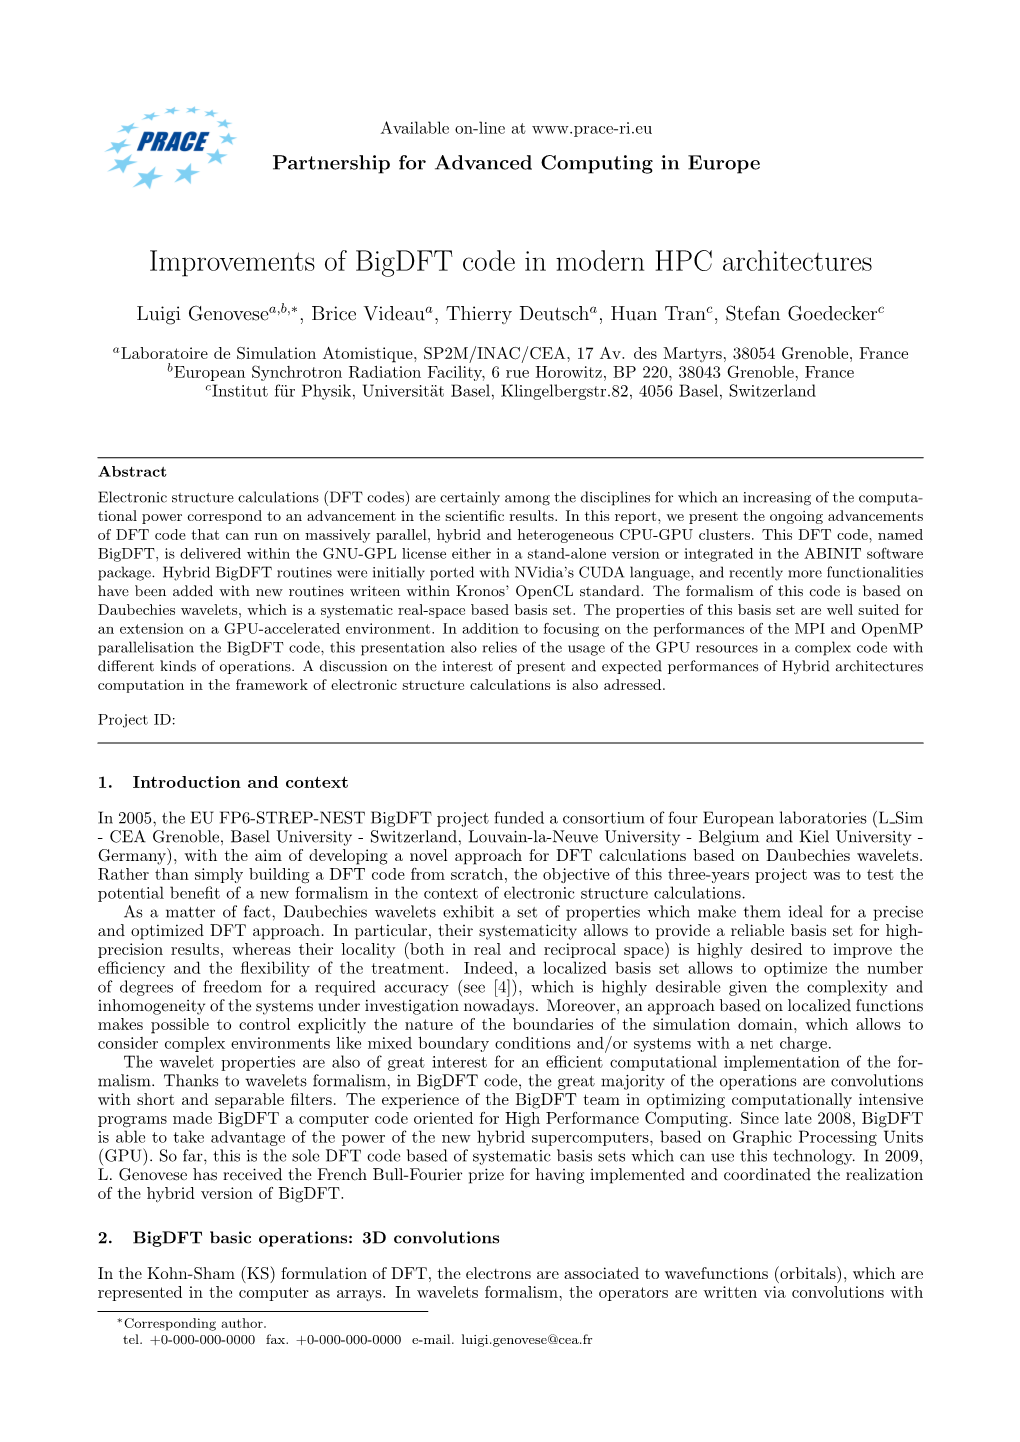 Improvements of Bigdft Code in Modern HPC Architectures